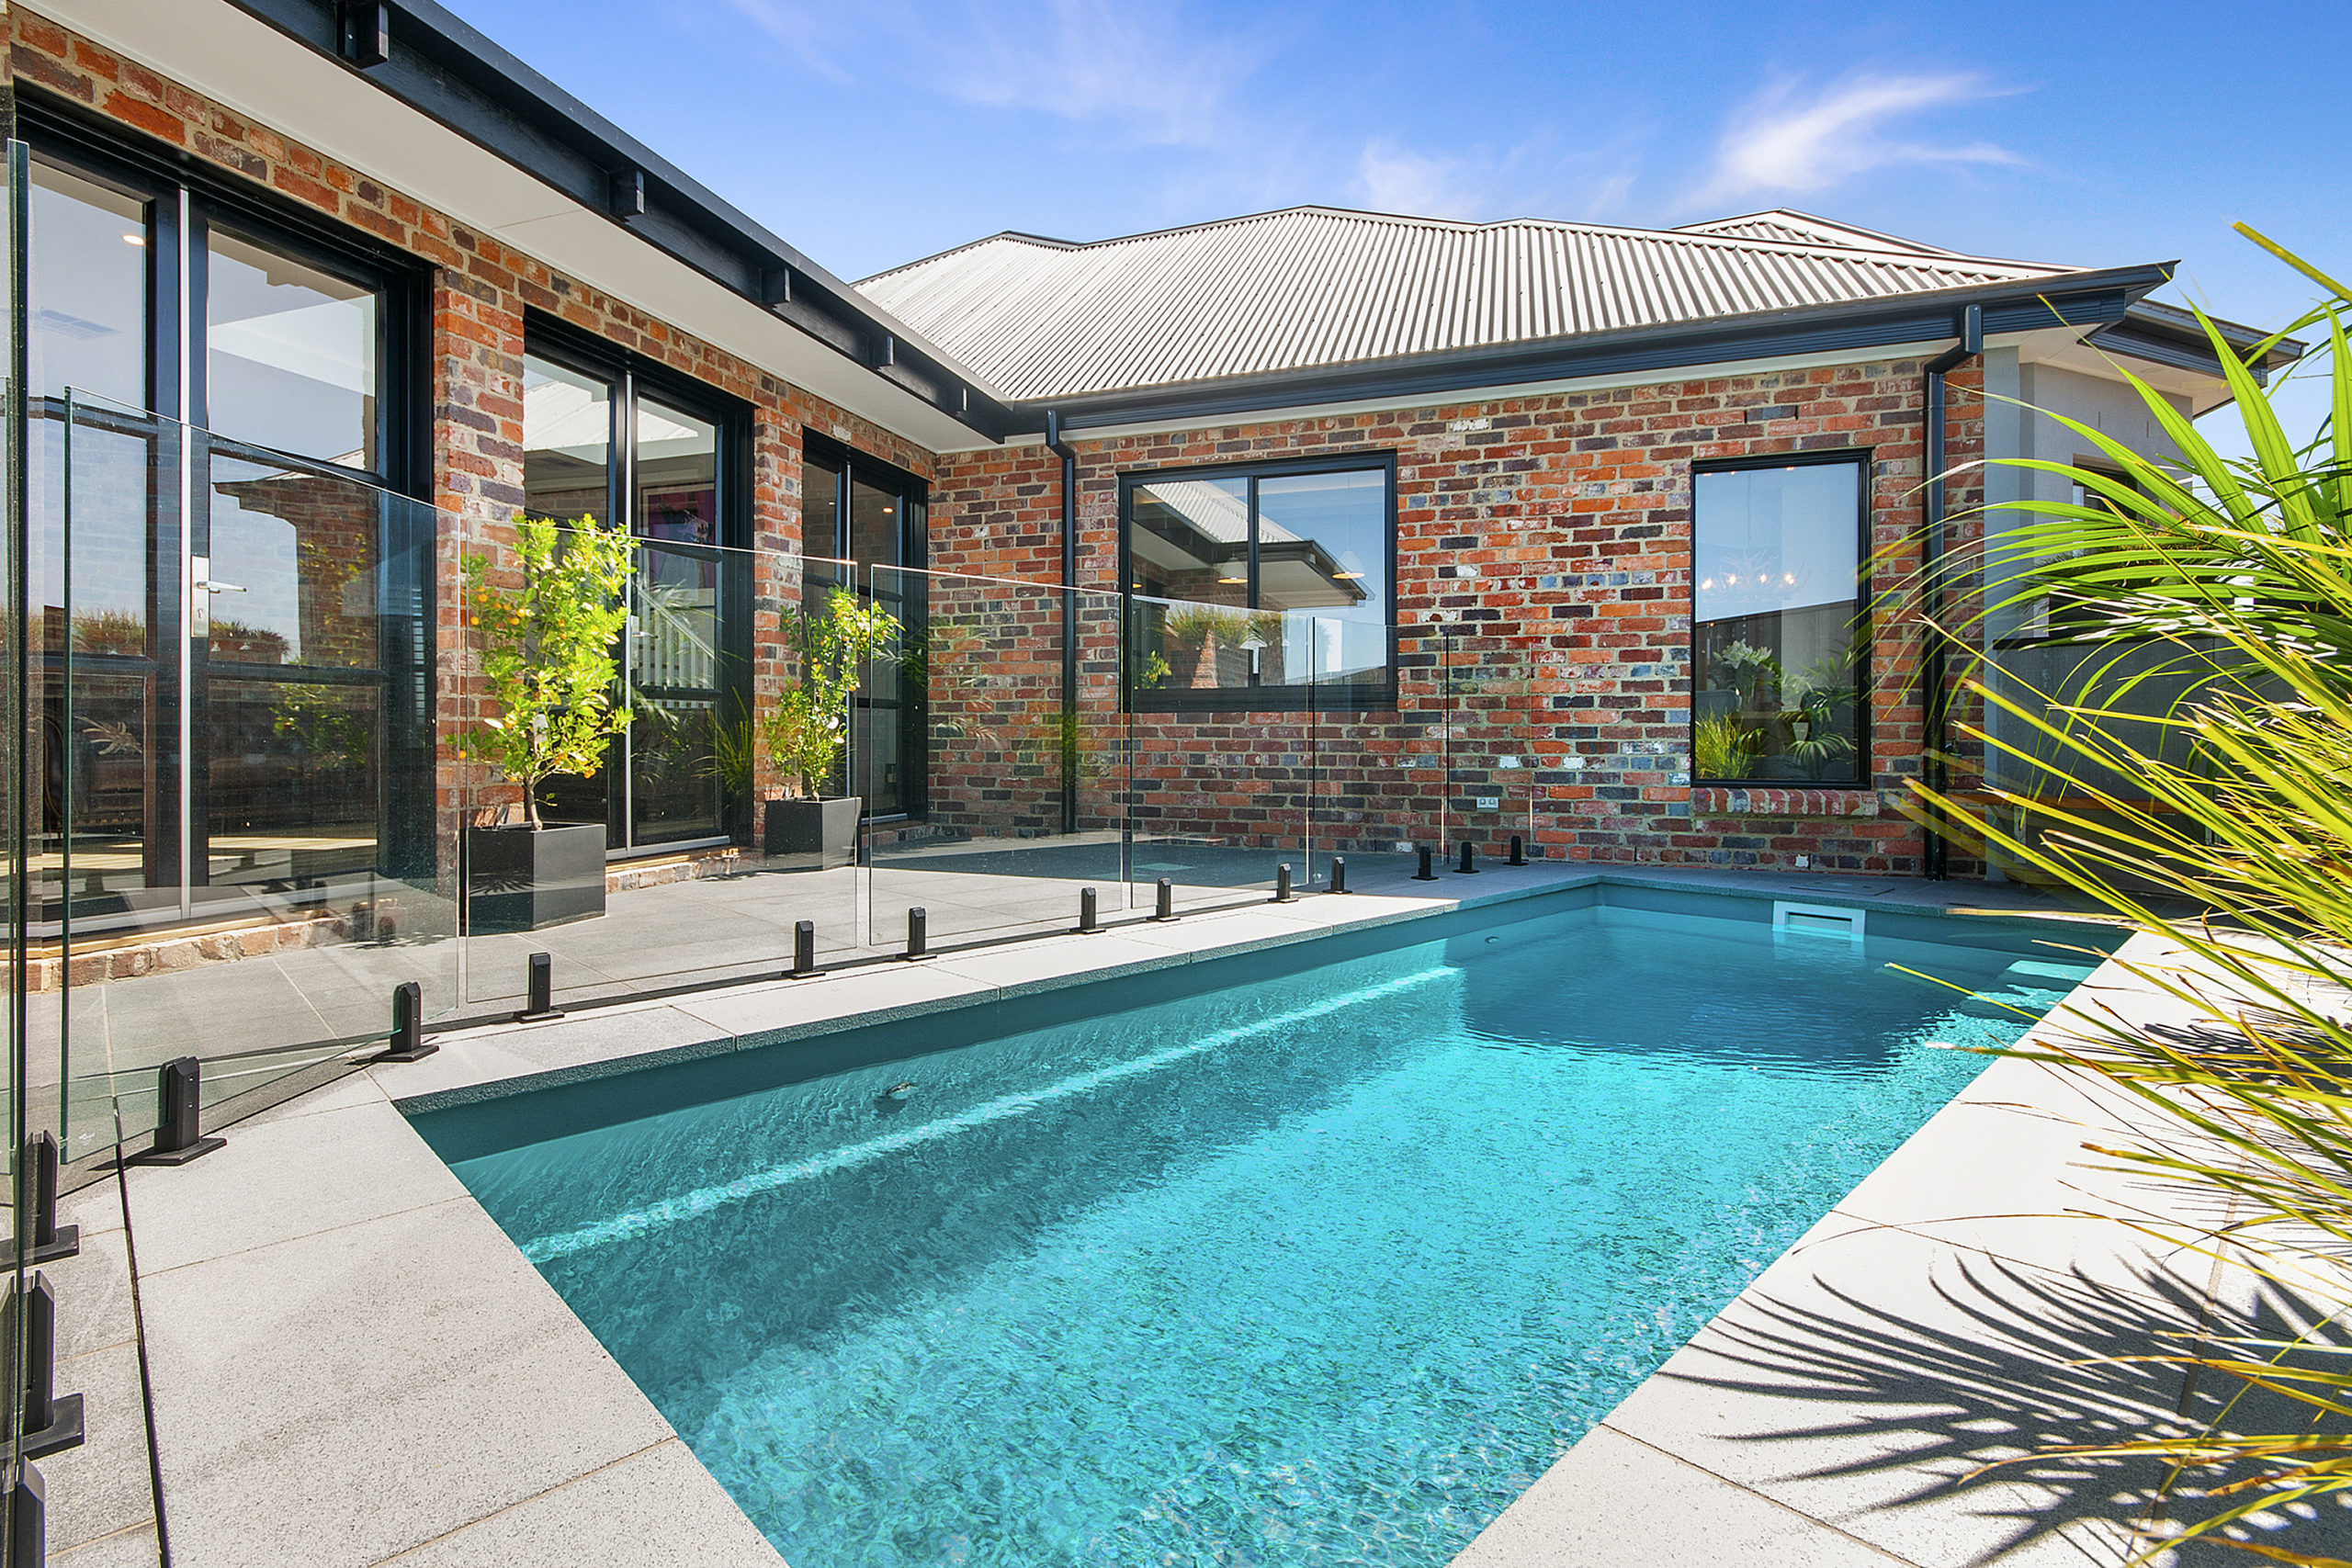 Leisure Pools Esprit fiberglass inground swimming pool